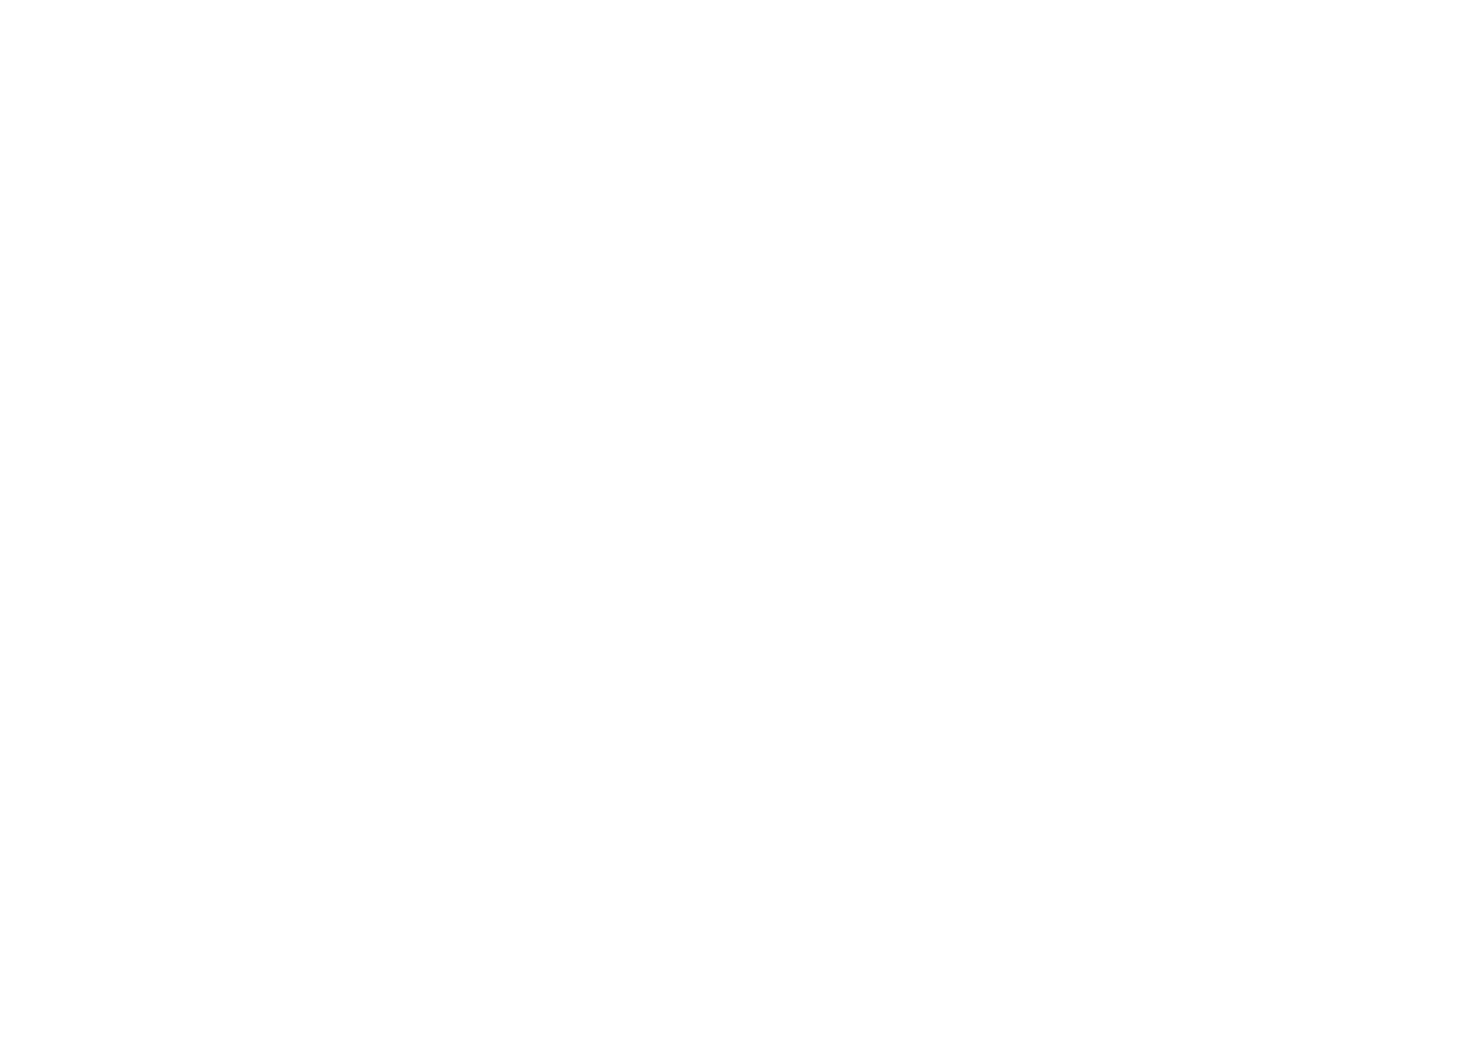 Law Office of Annie Scott